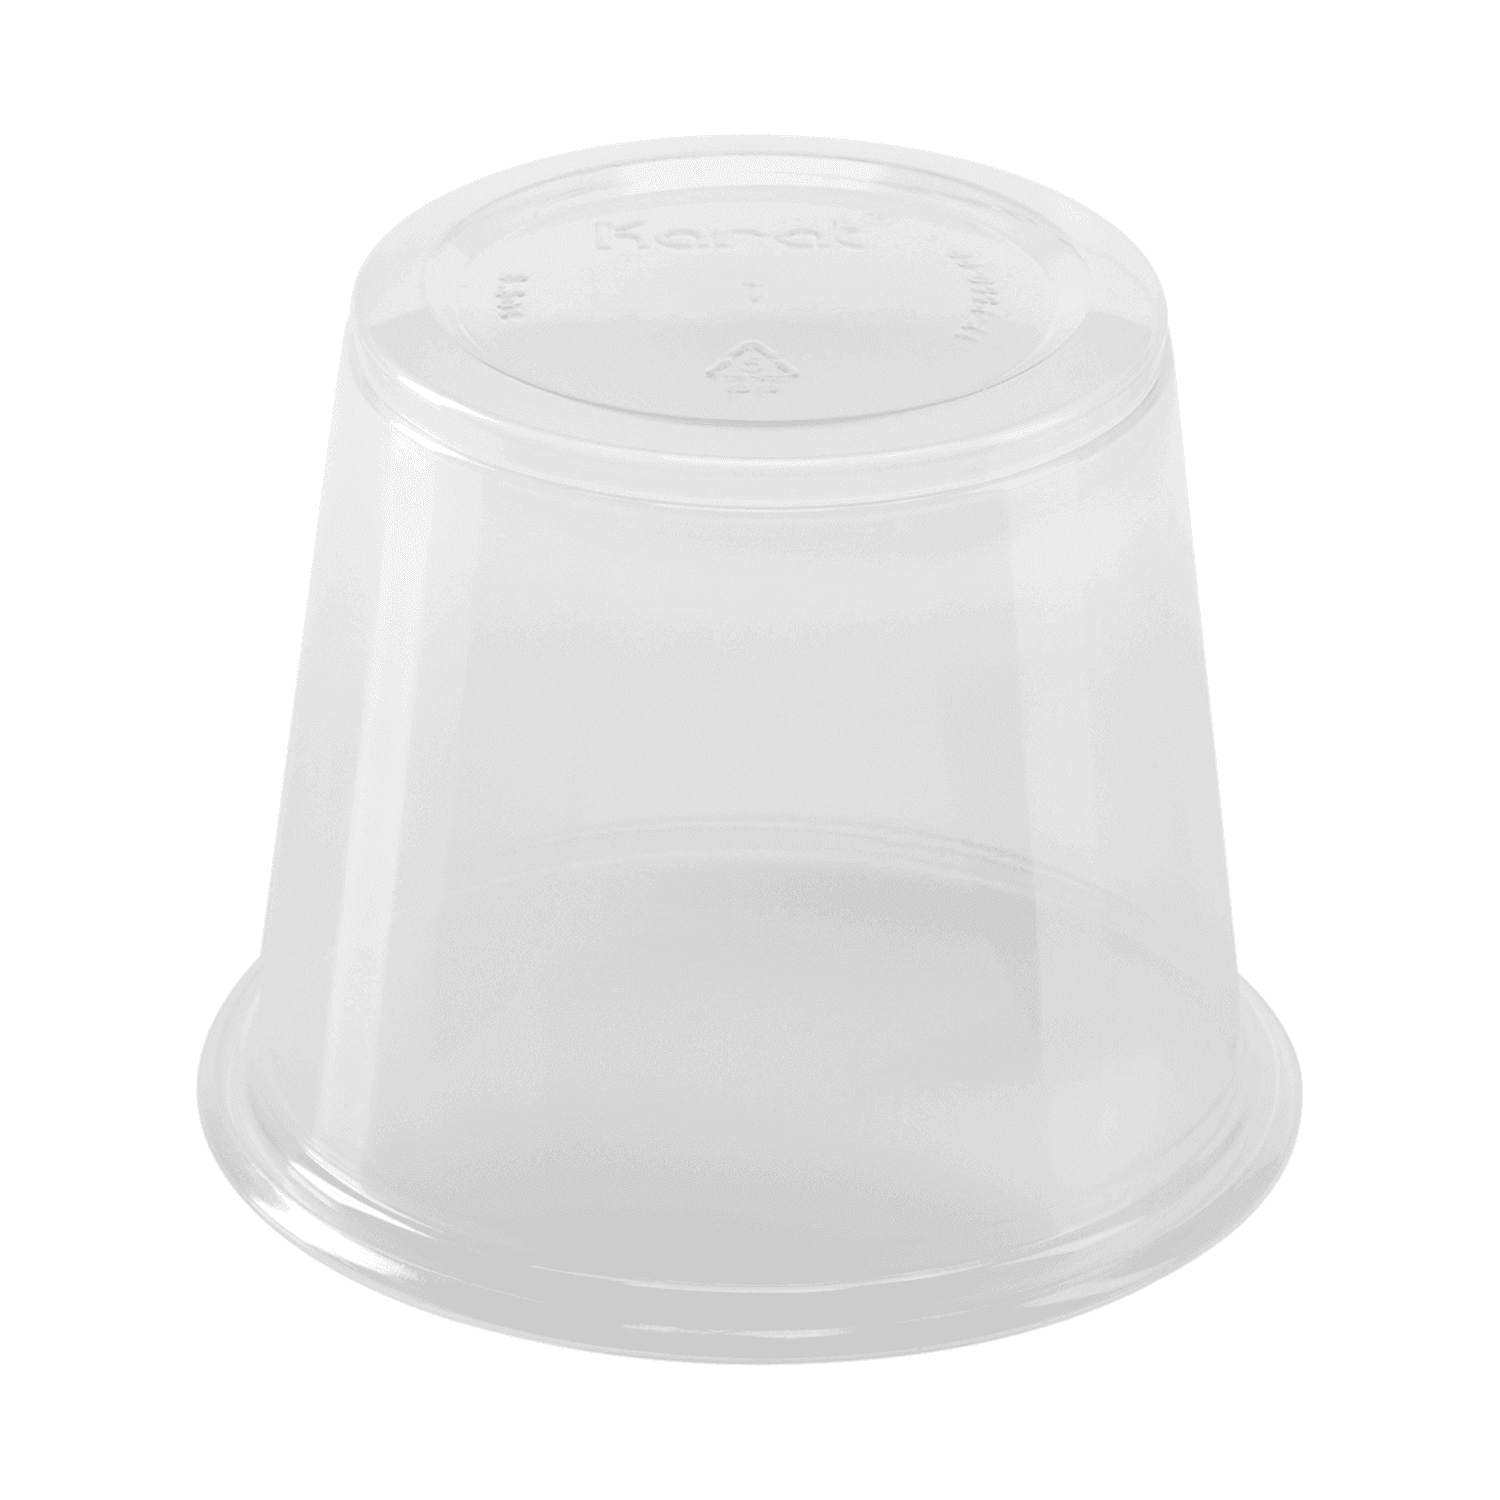 Clear Karat 5.5 oz PP Plastic Portion Cup upside down